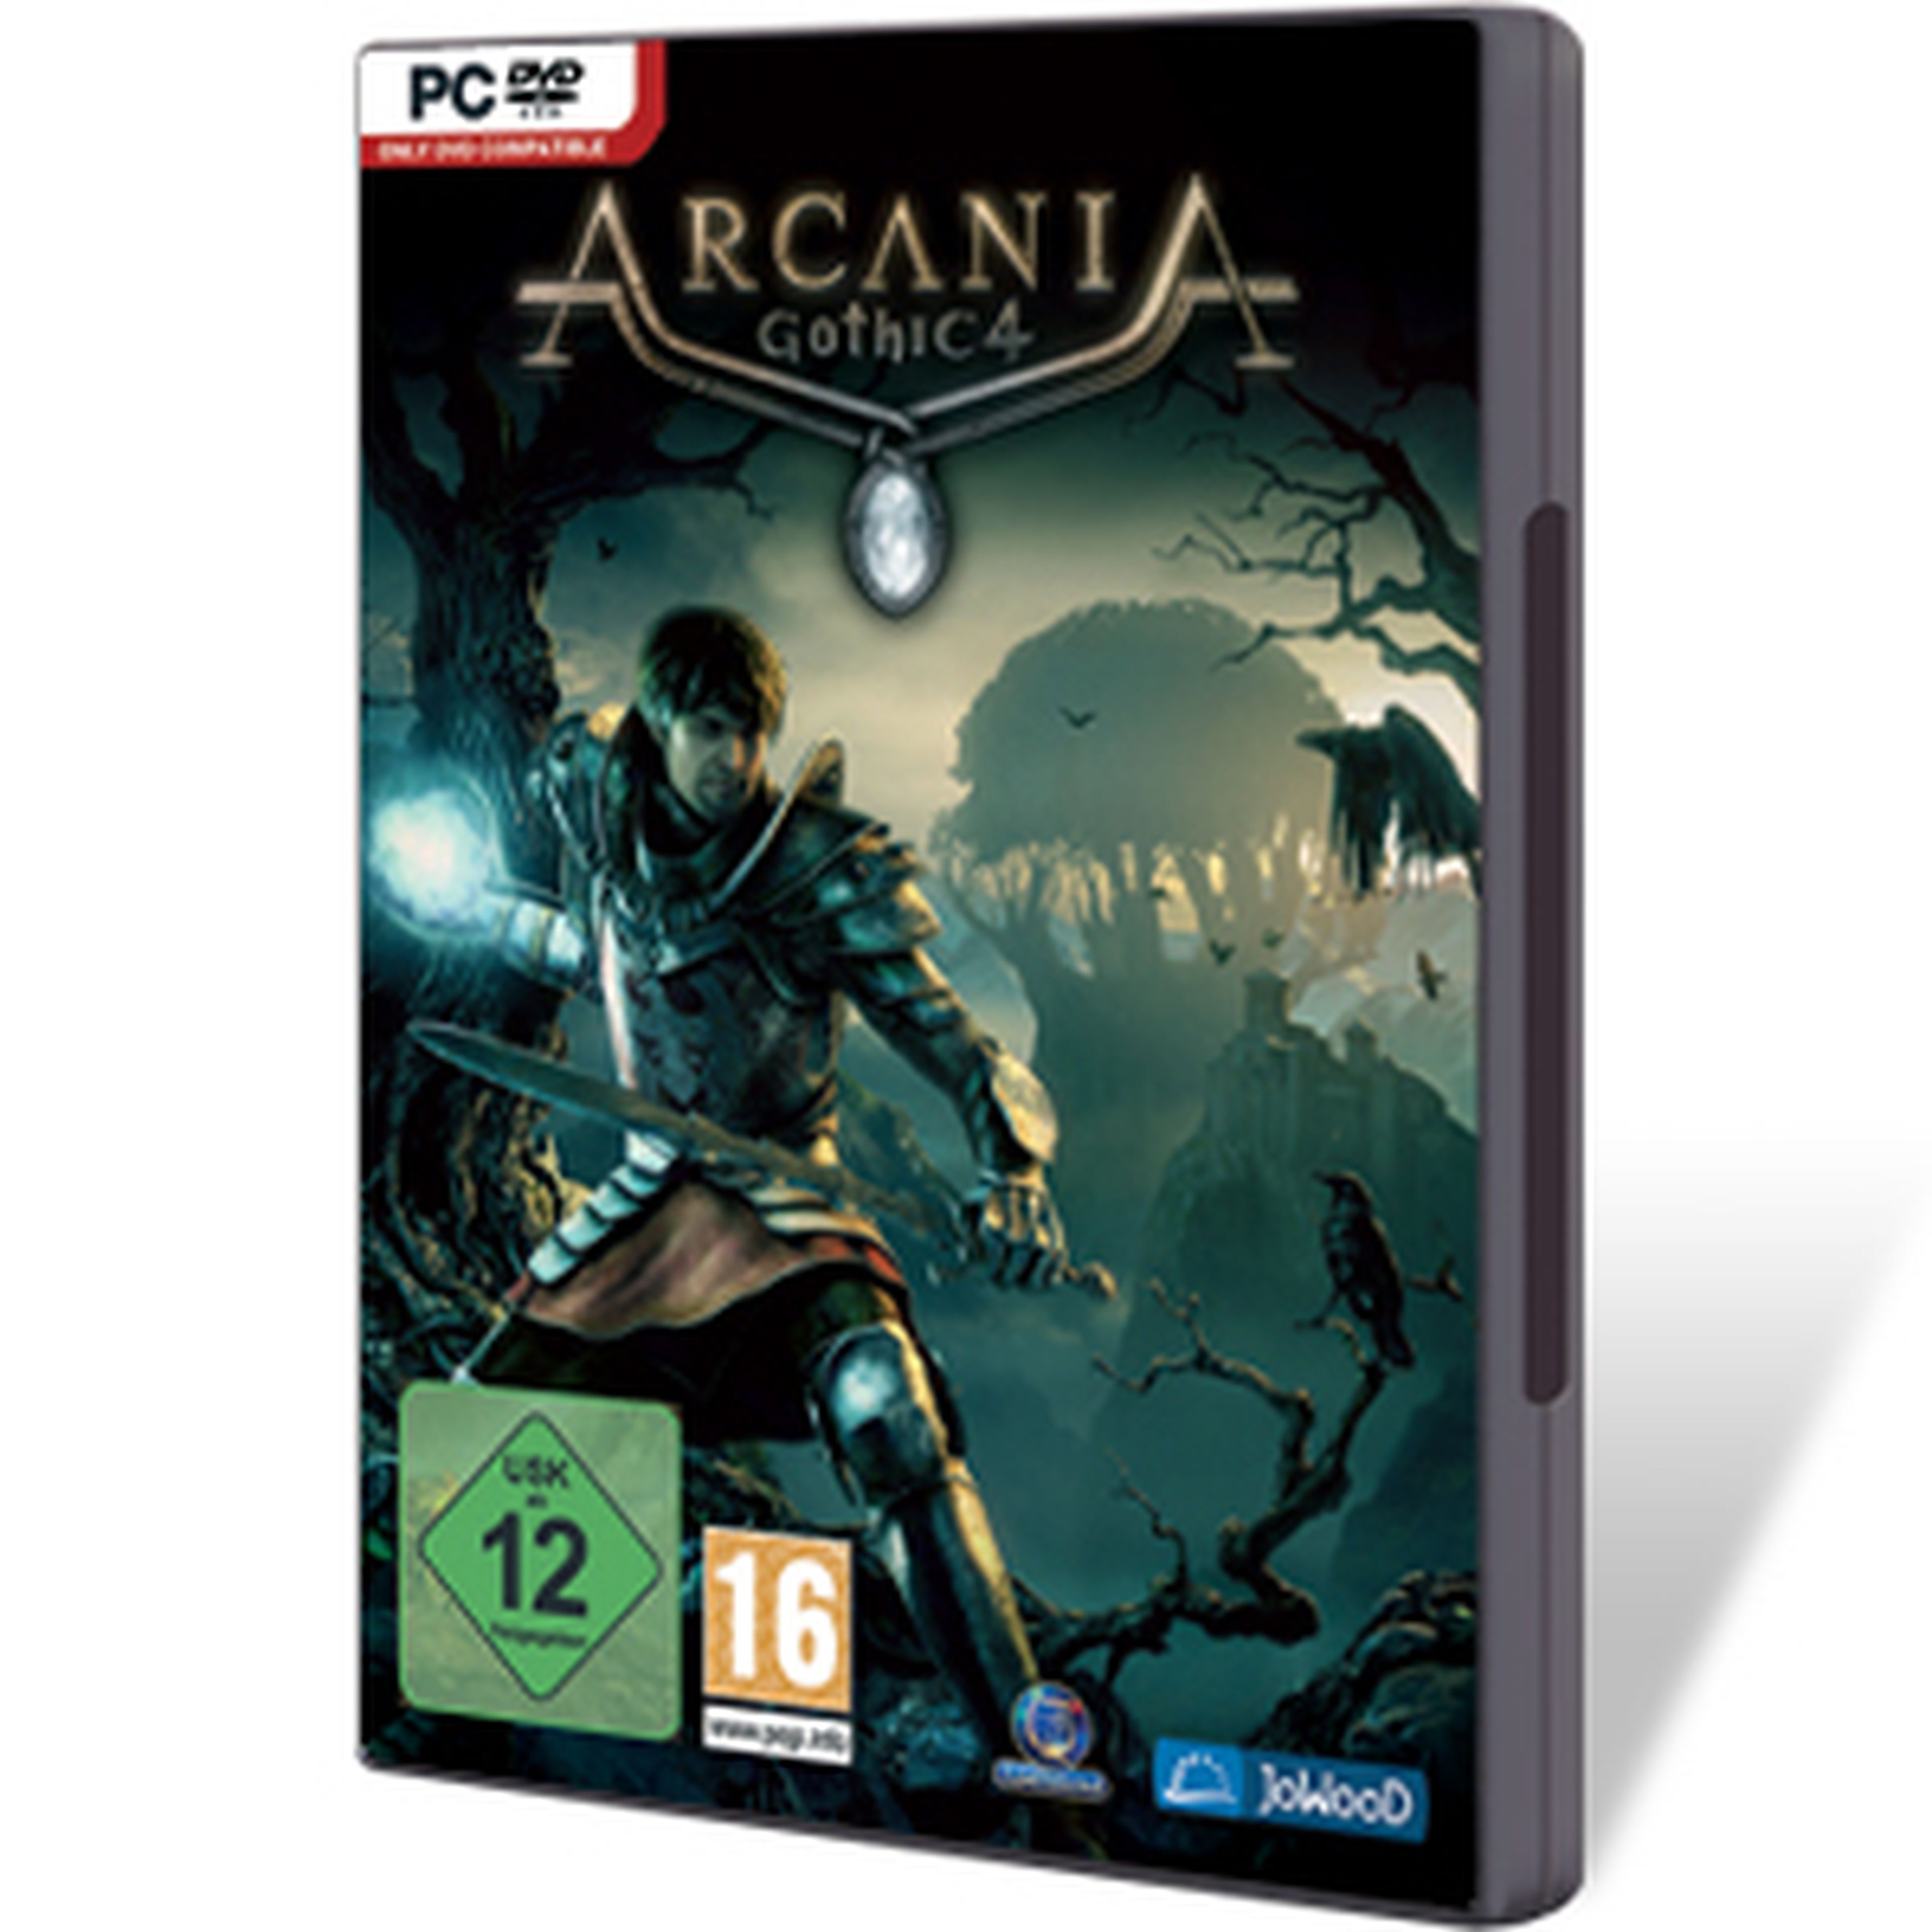 Arcania Gothic 4 para PC